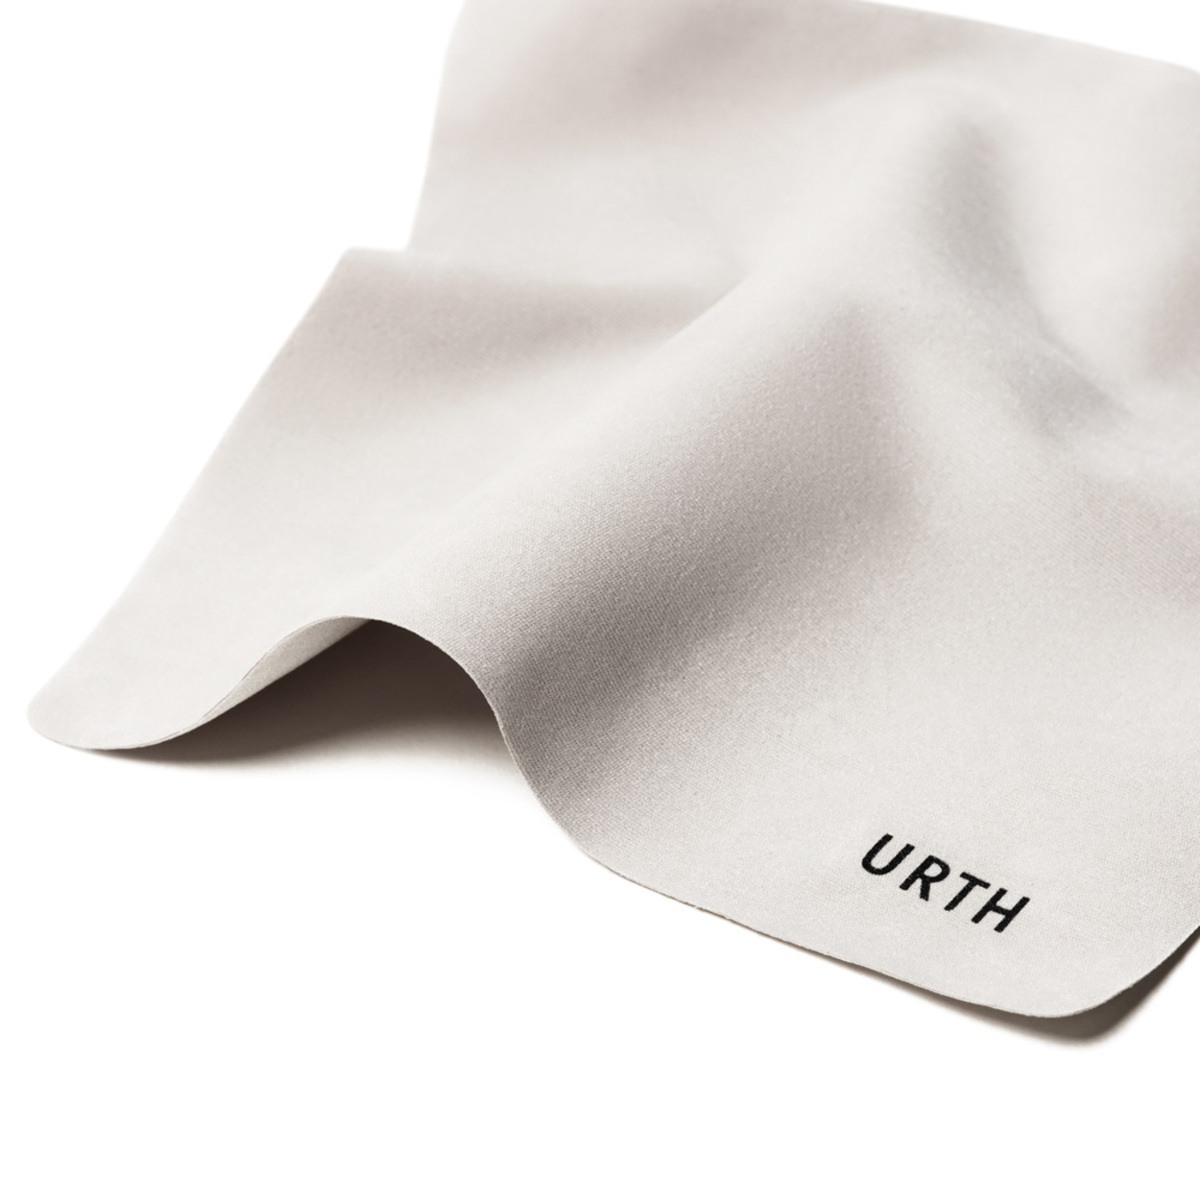 Urth 58mm Ethereal ⅛ Black Mist Objektivfilter (Plus+)